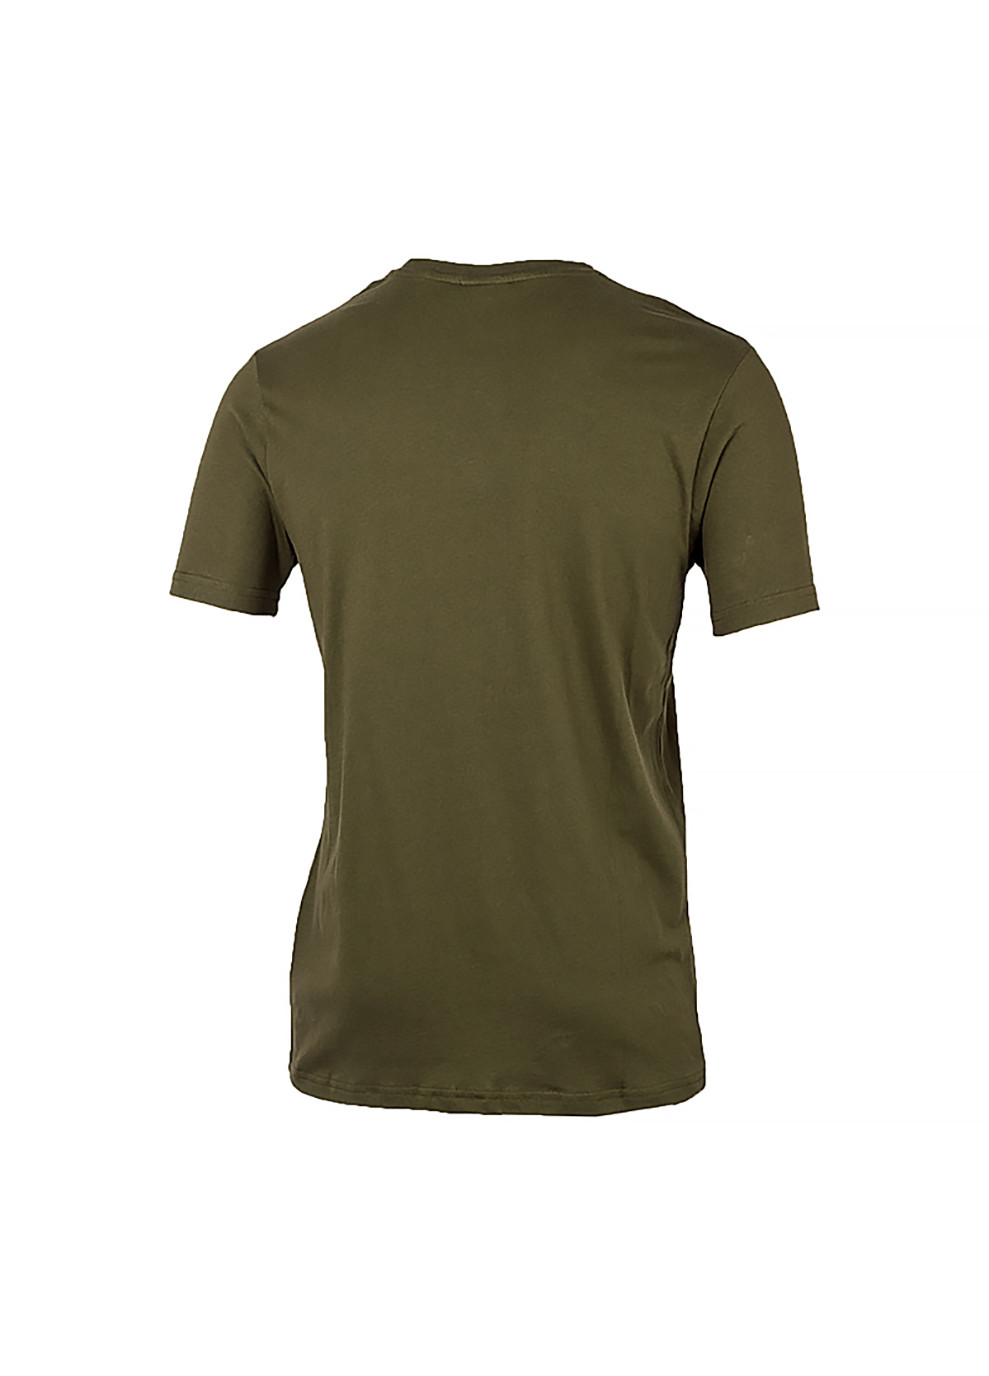 Хаки (оливковая) мужская футболка sl prado хаки s (shc07405-khaki s) Ellesse